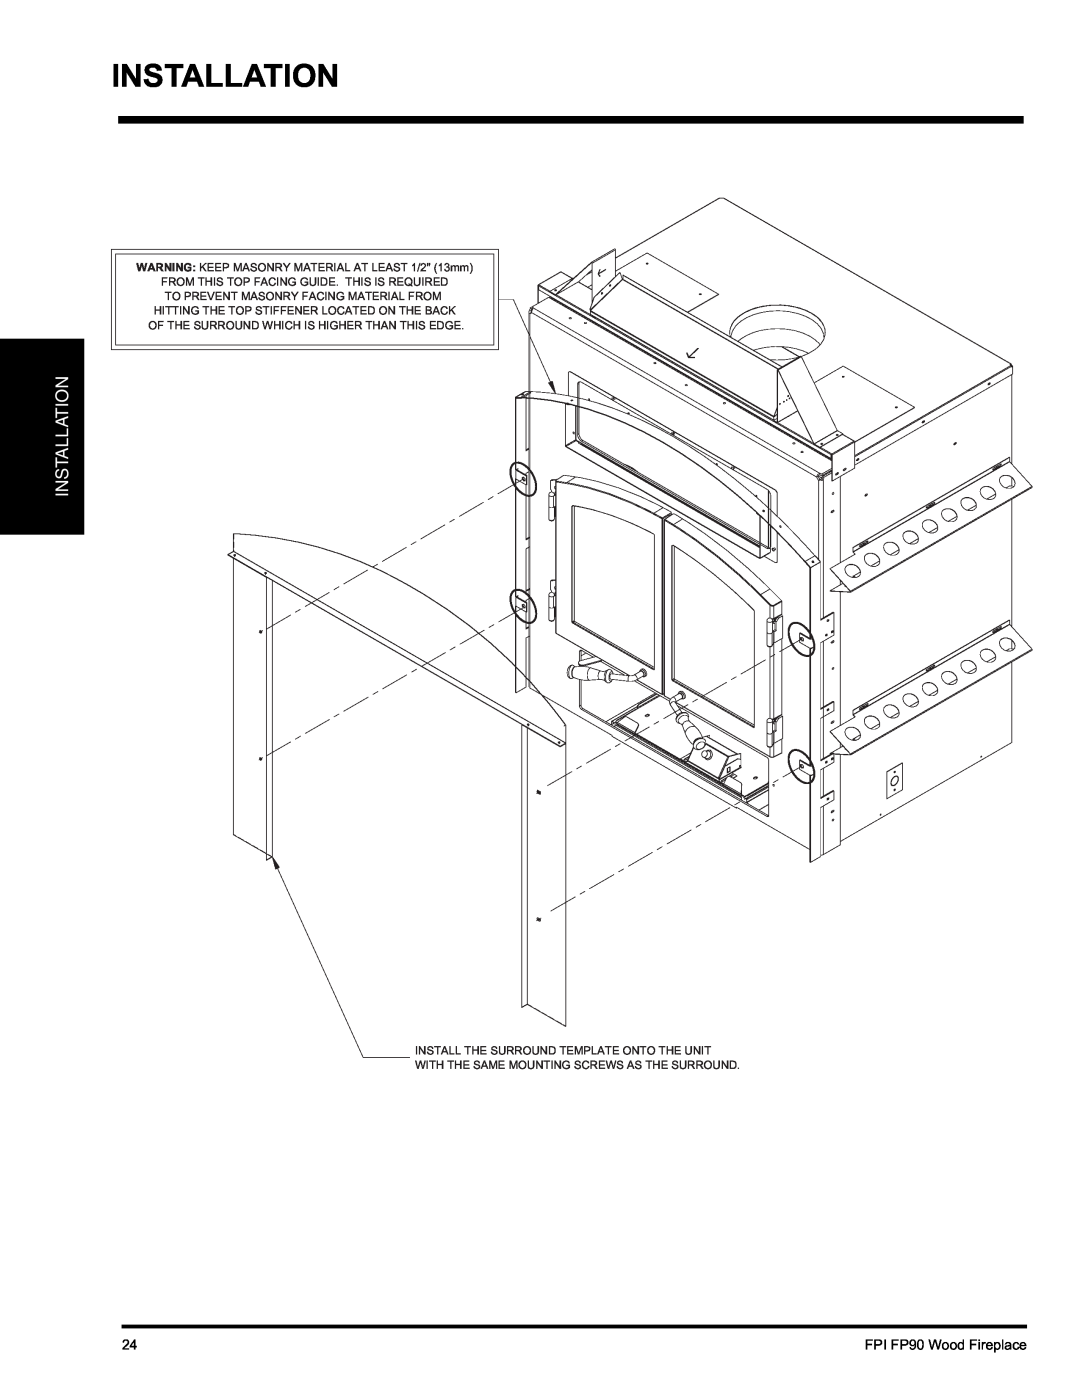 Regency installation manual Installation, FPI FP90 Wood Fireplace, WARNING KEEP MASONRY MATERIAL AT LEAST 1/2 13mm 